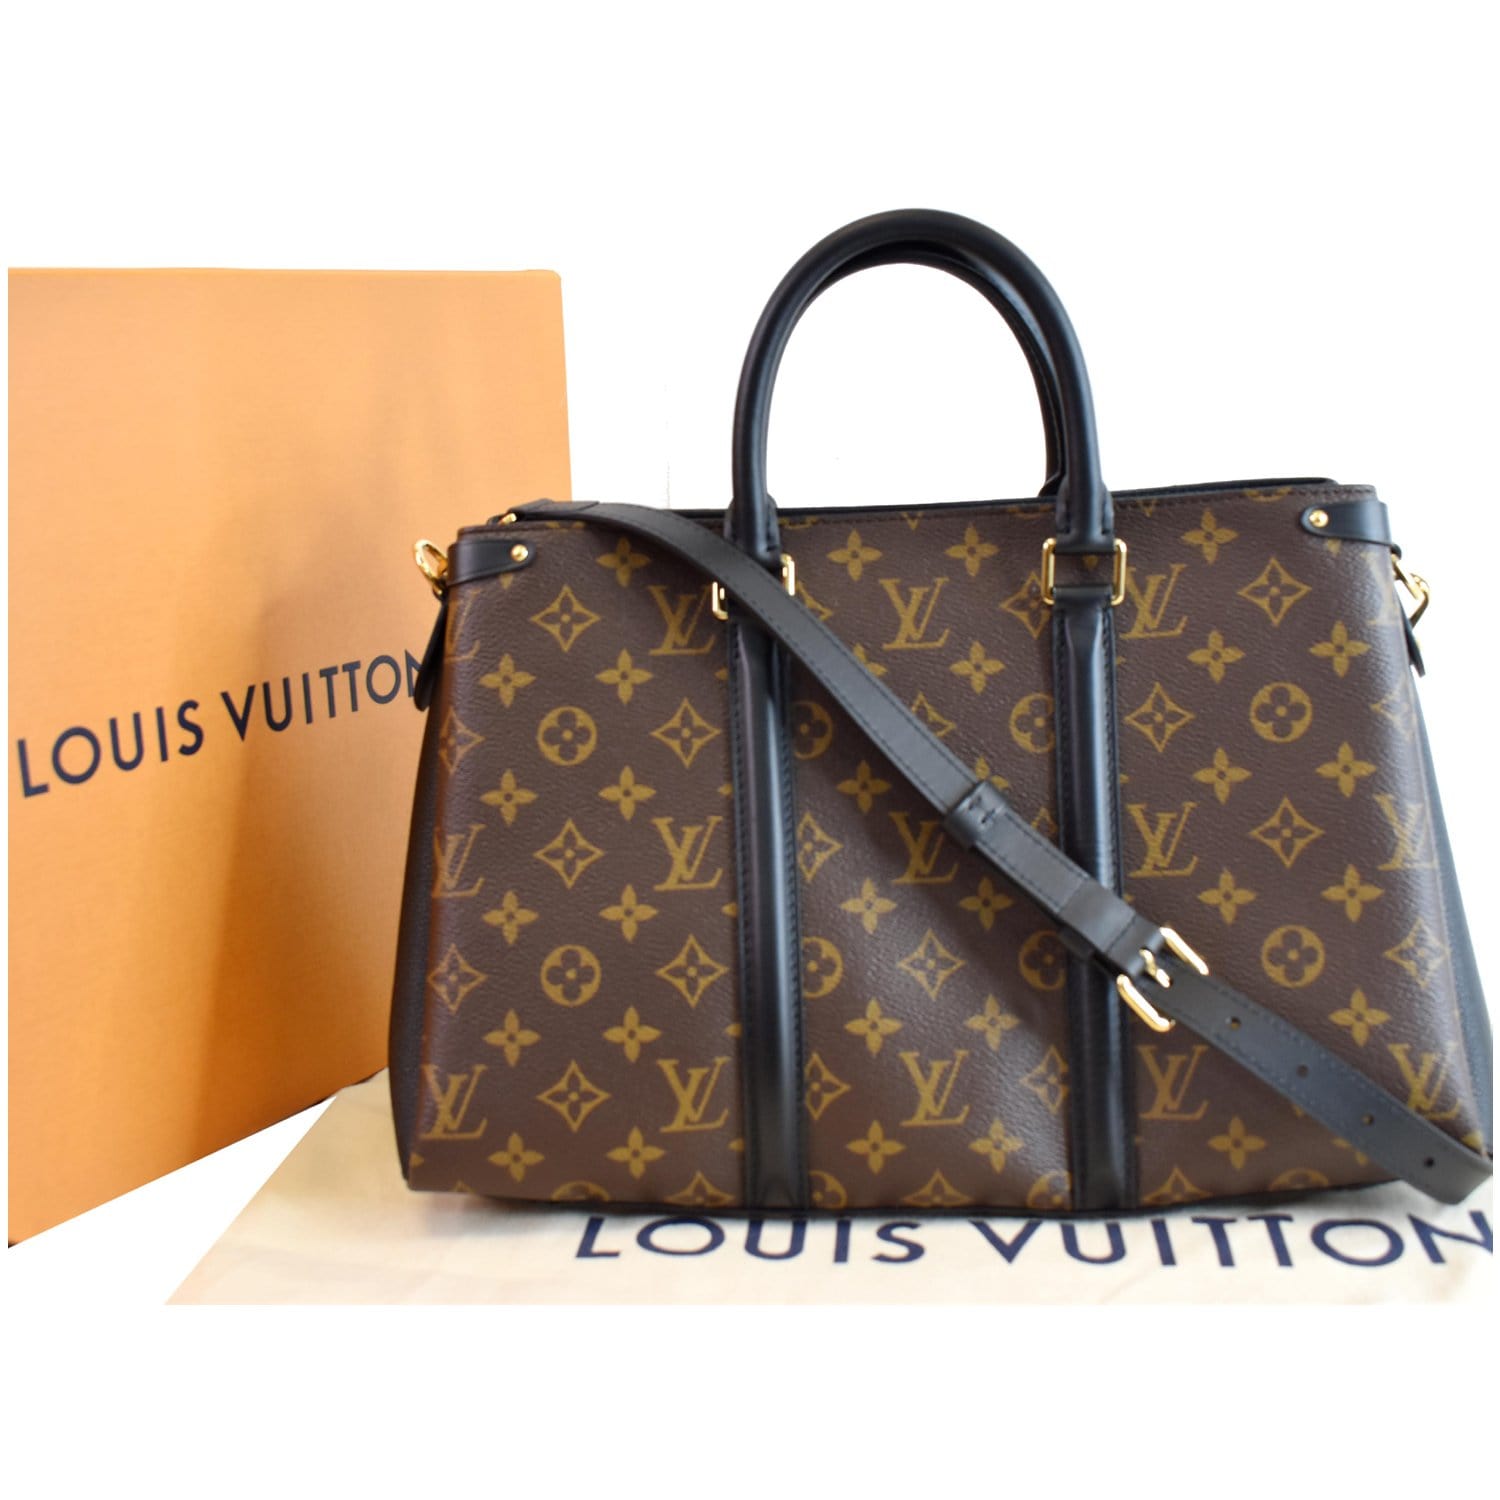 Louis Vuitton Soufflot Tote